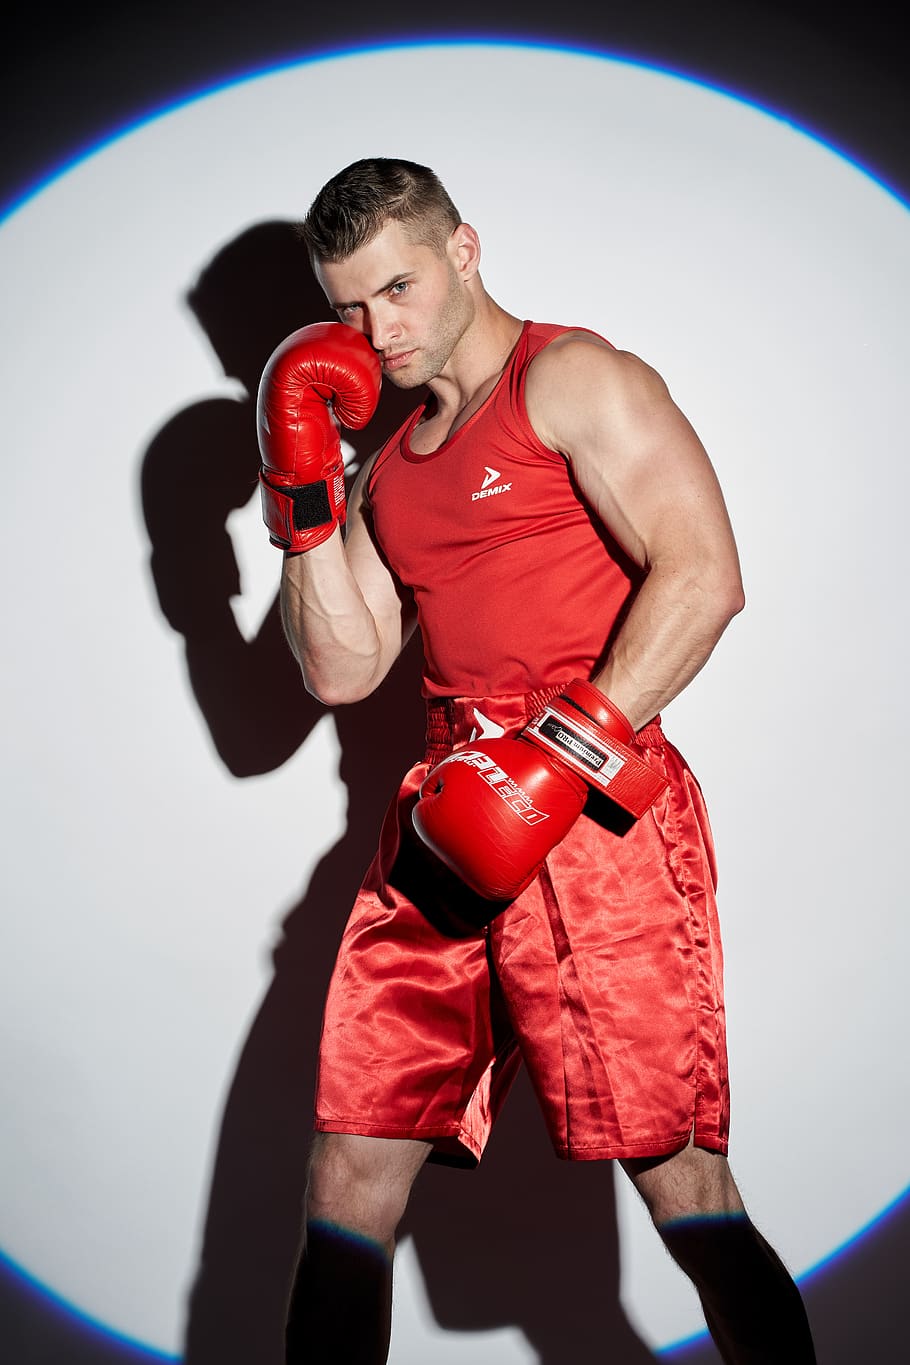 boxe, esporte, esportes, boxeador, kickboxing, batalha, luvas, atleta, modelo, sessão de fotos